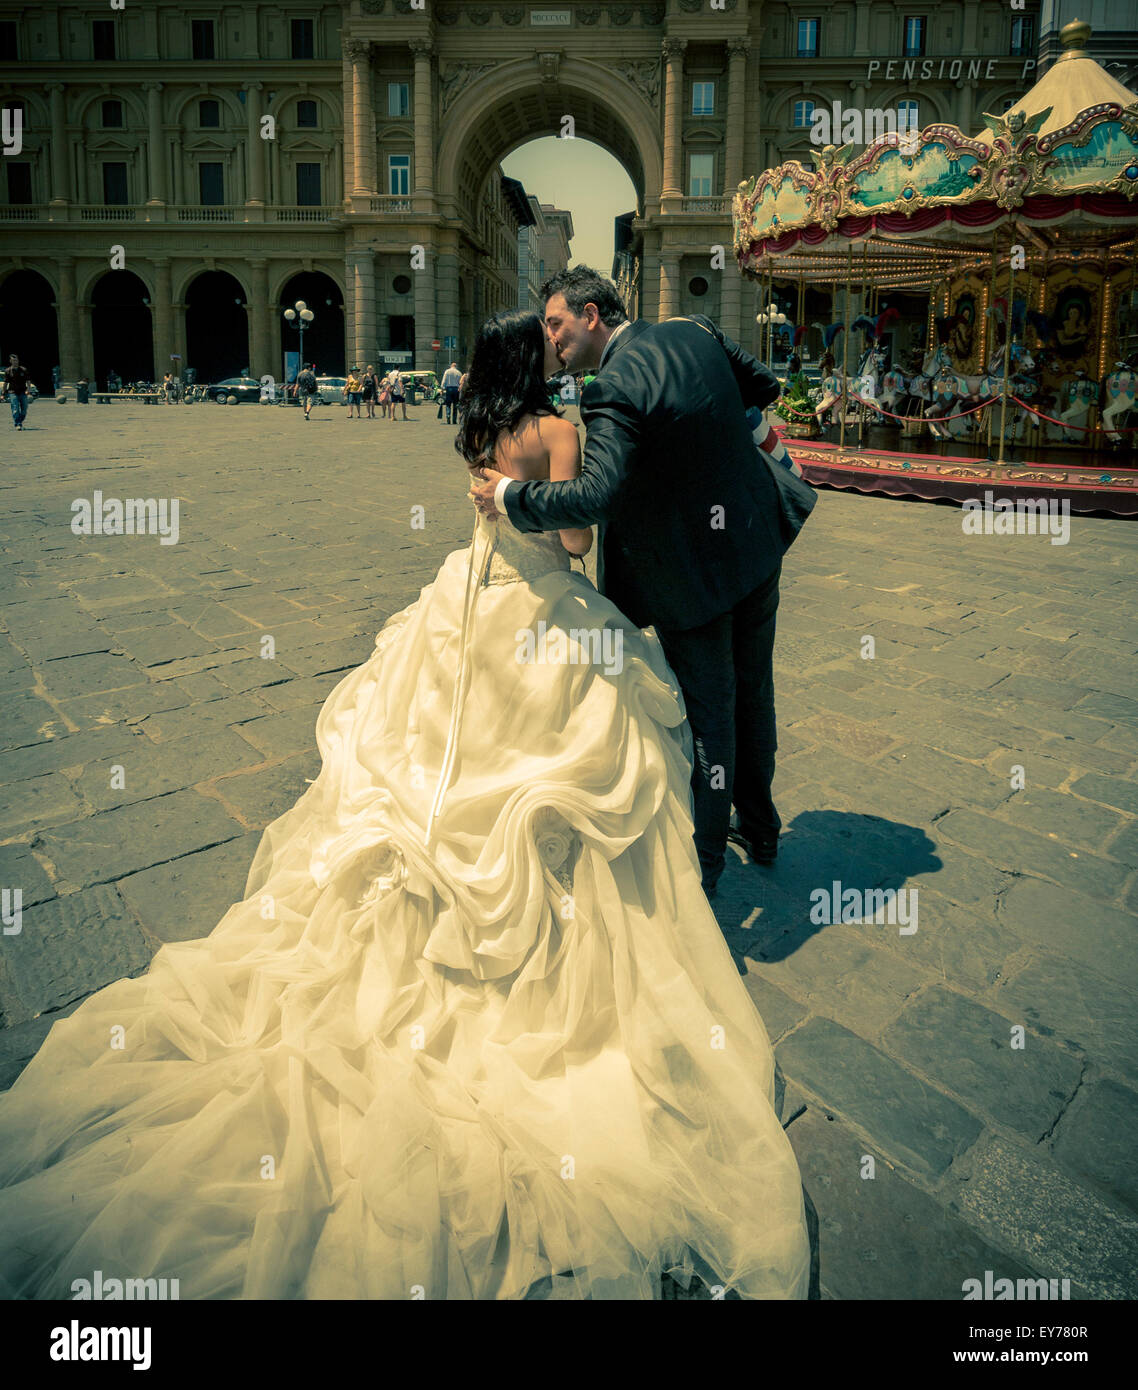 Bride and groom kissing in Piazzo della Repubblica, Florence, Italy. Stock Photo